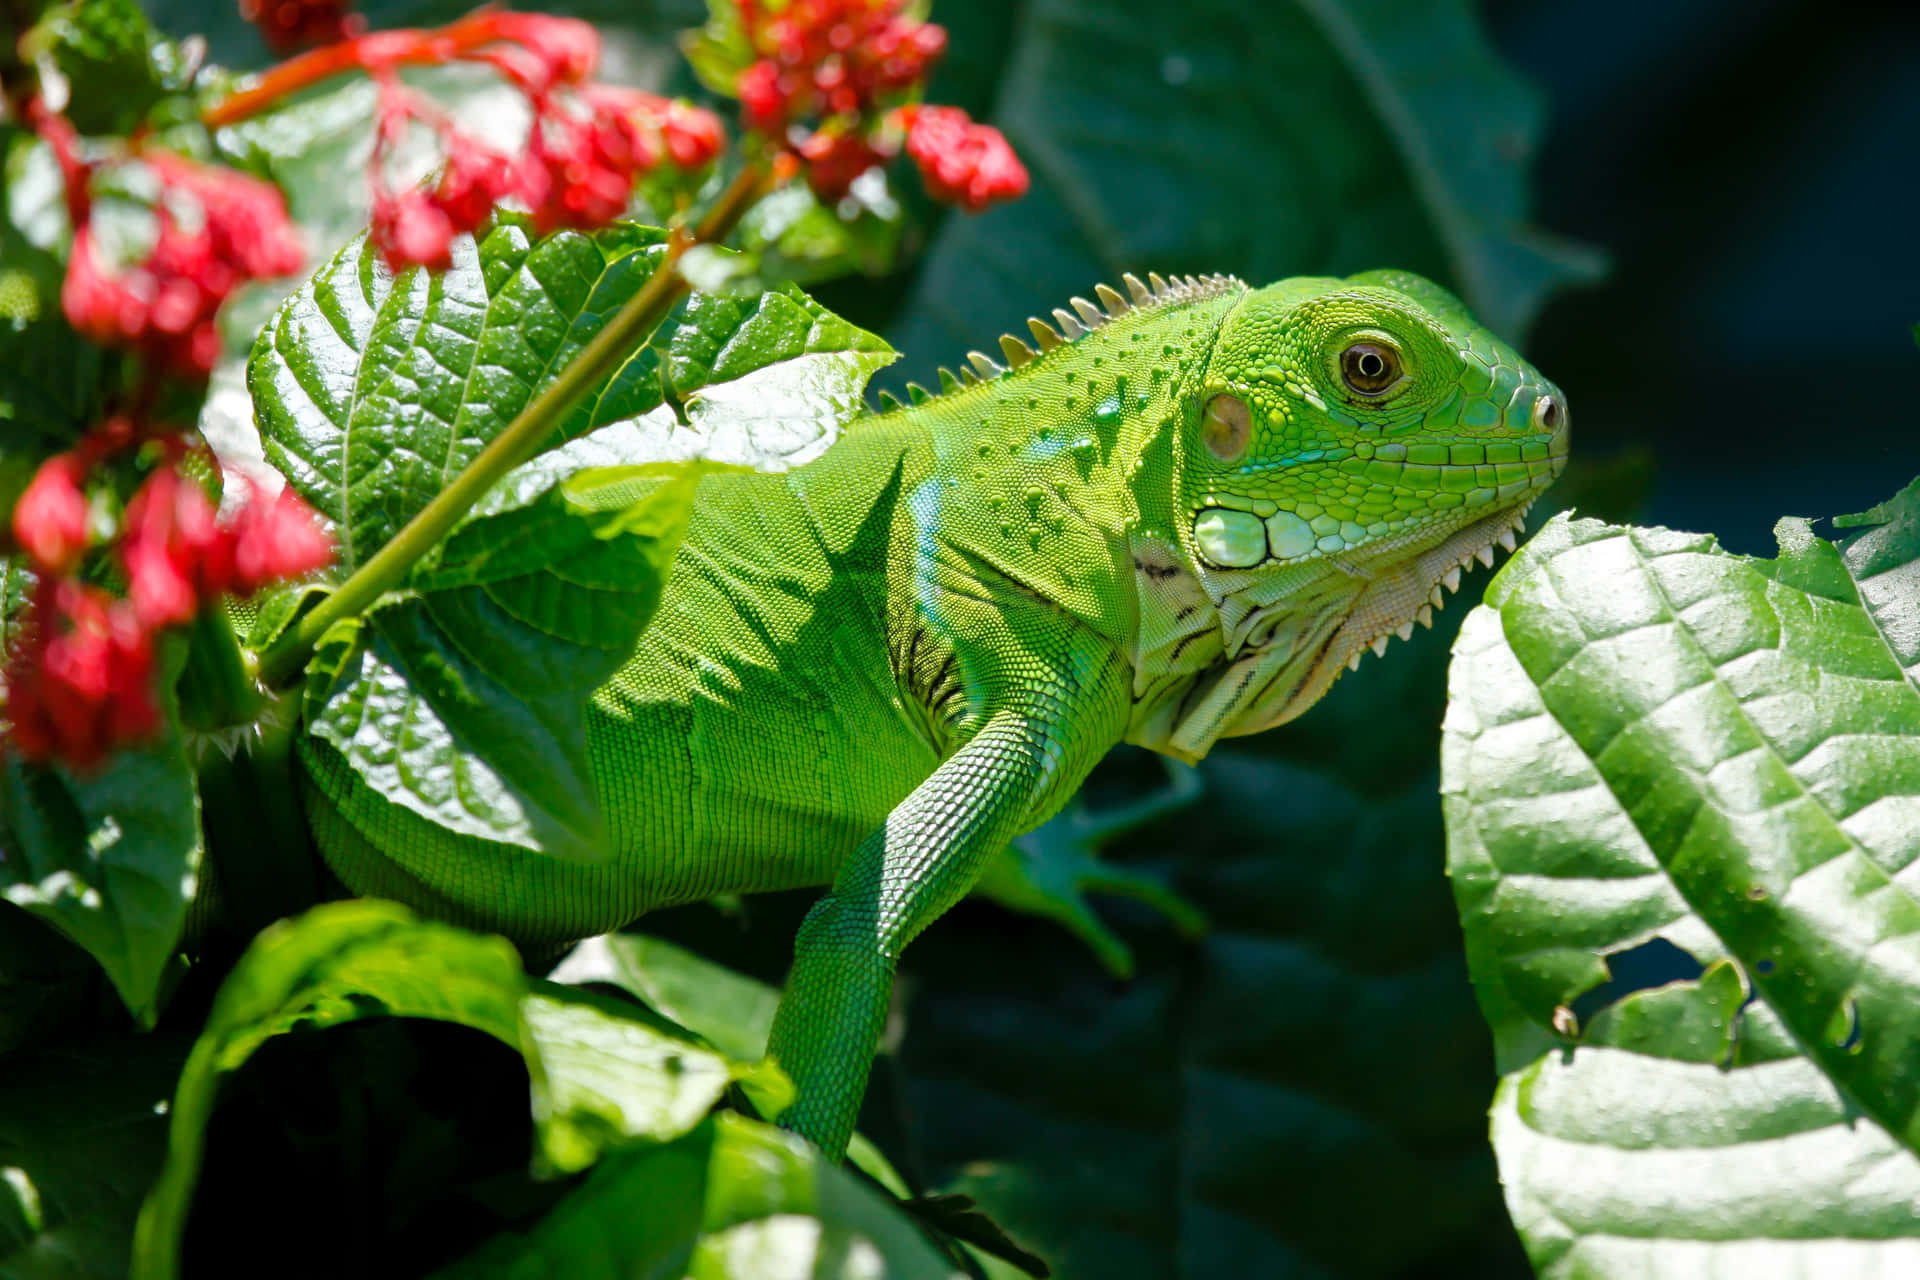 Breathtaking close-up shot of a beautiful green lizard in its natural habitat